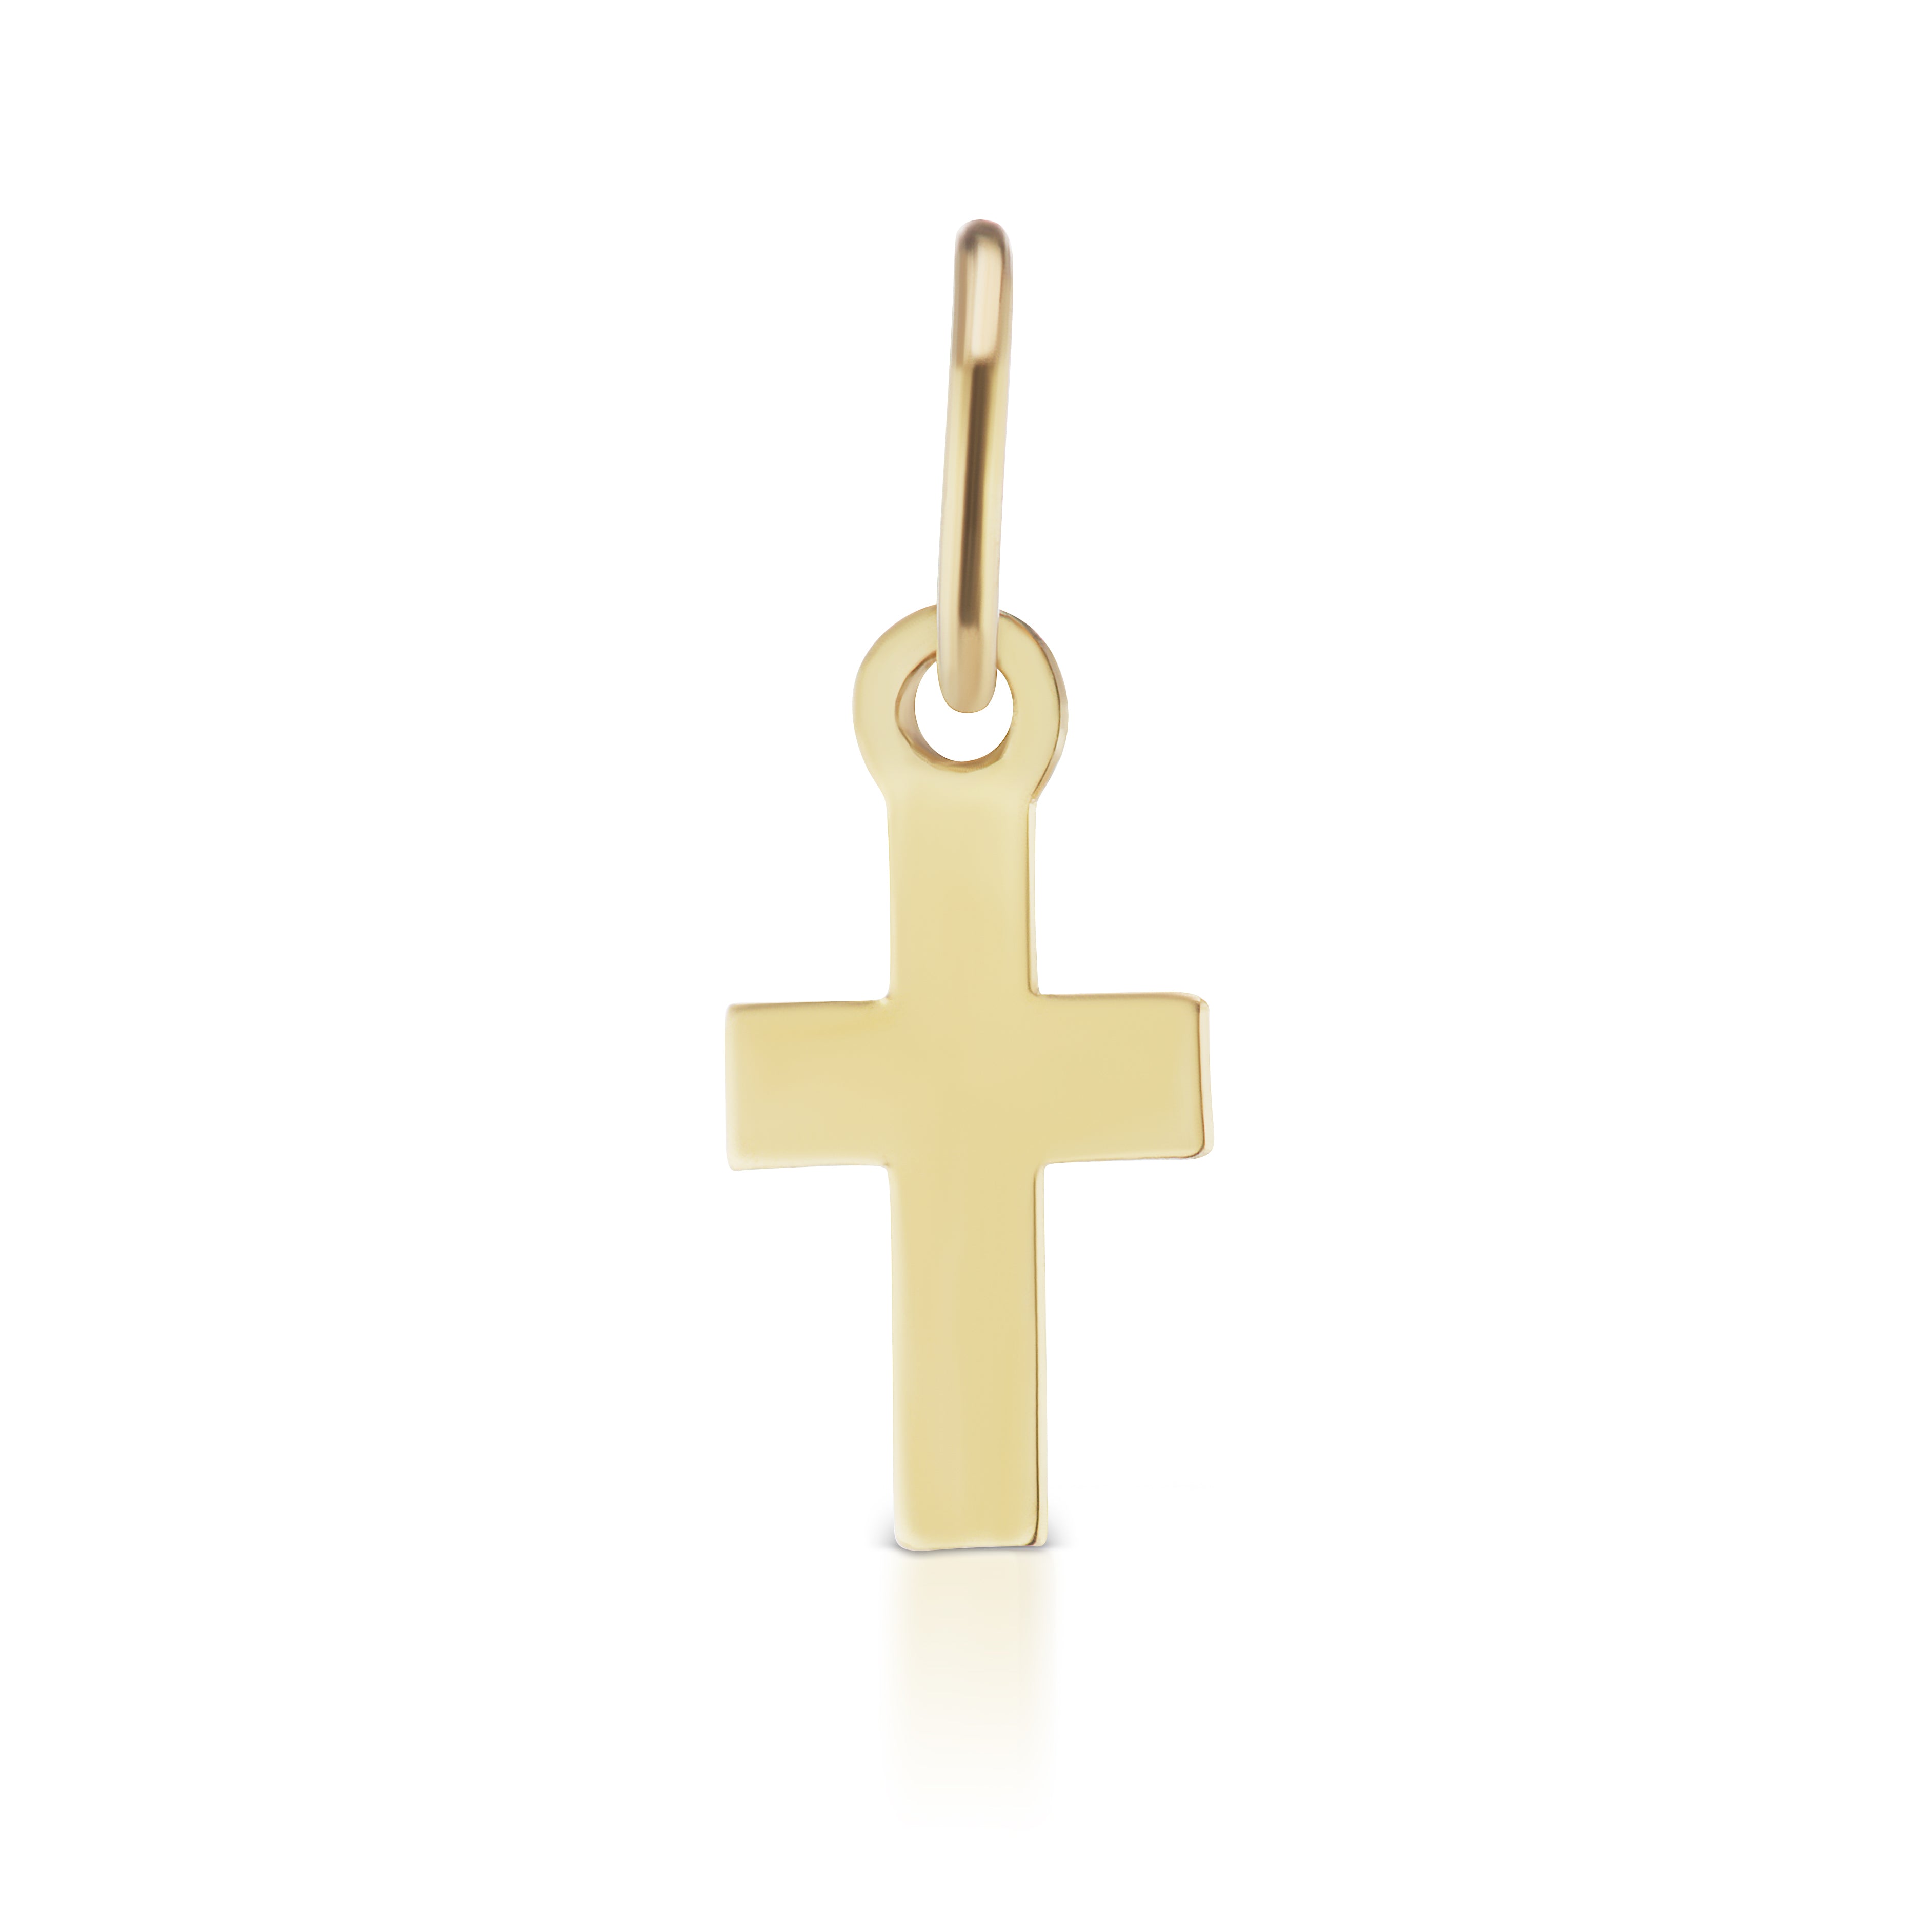 The Gold Petite Cross Charm